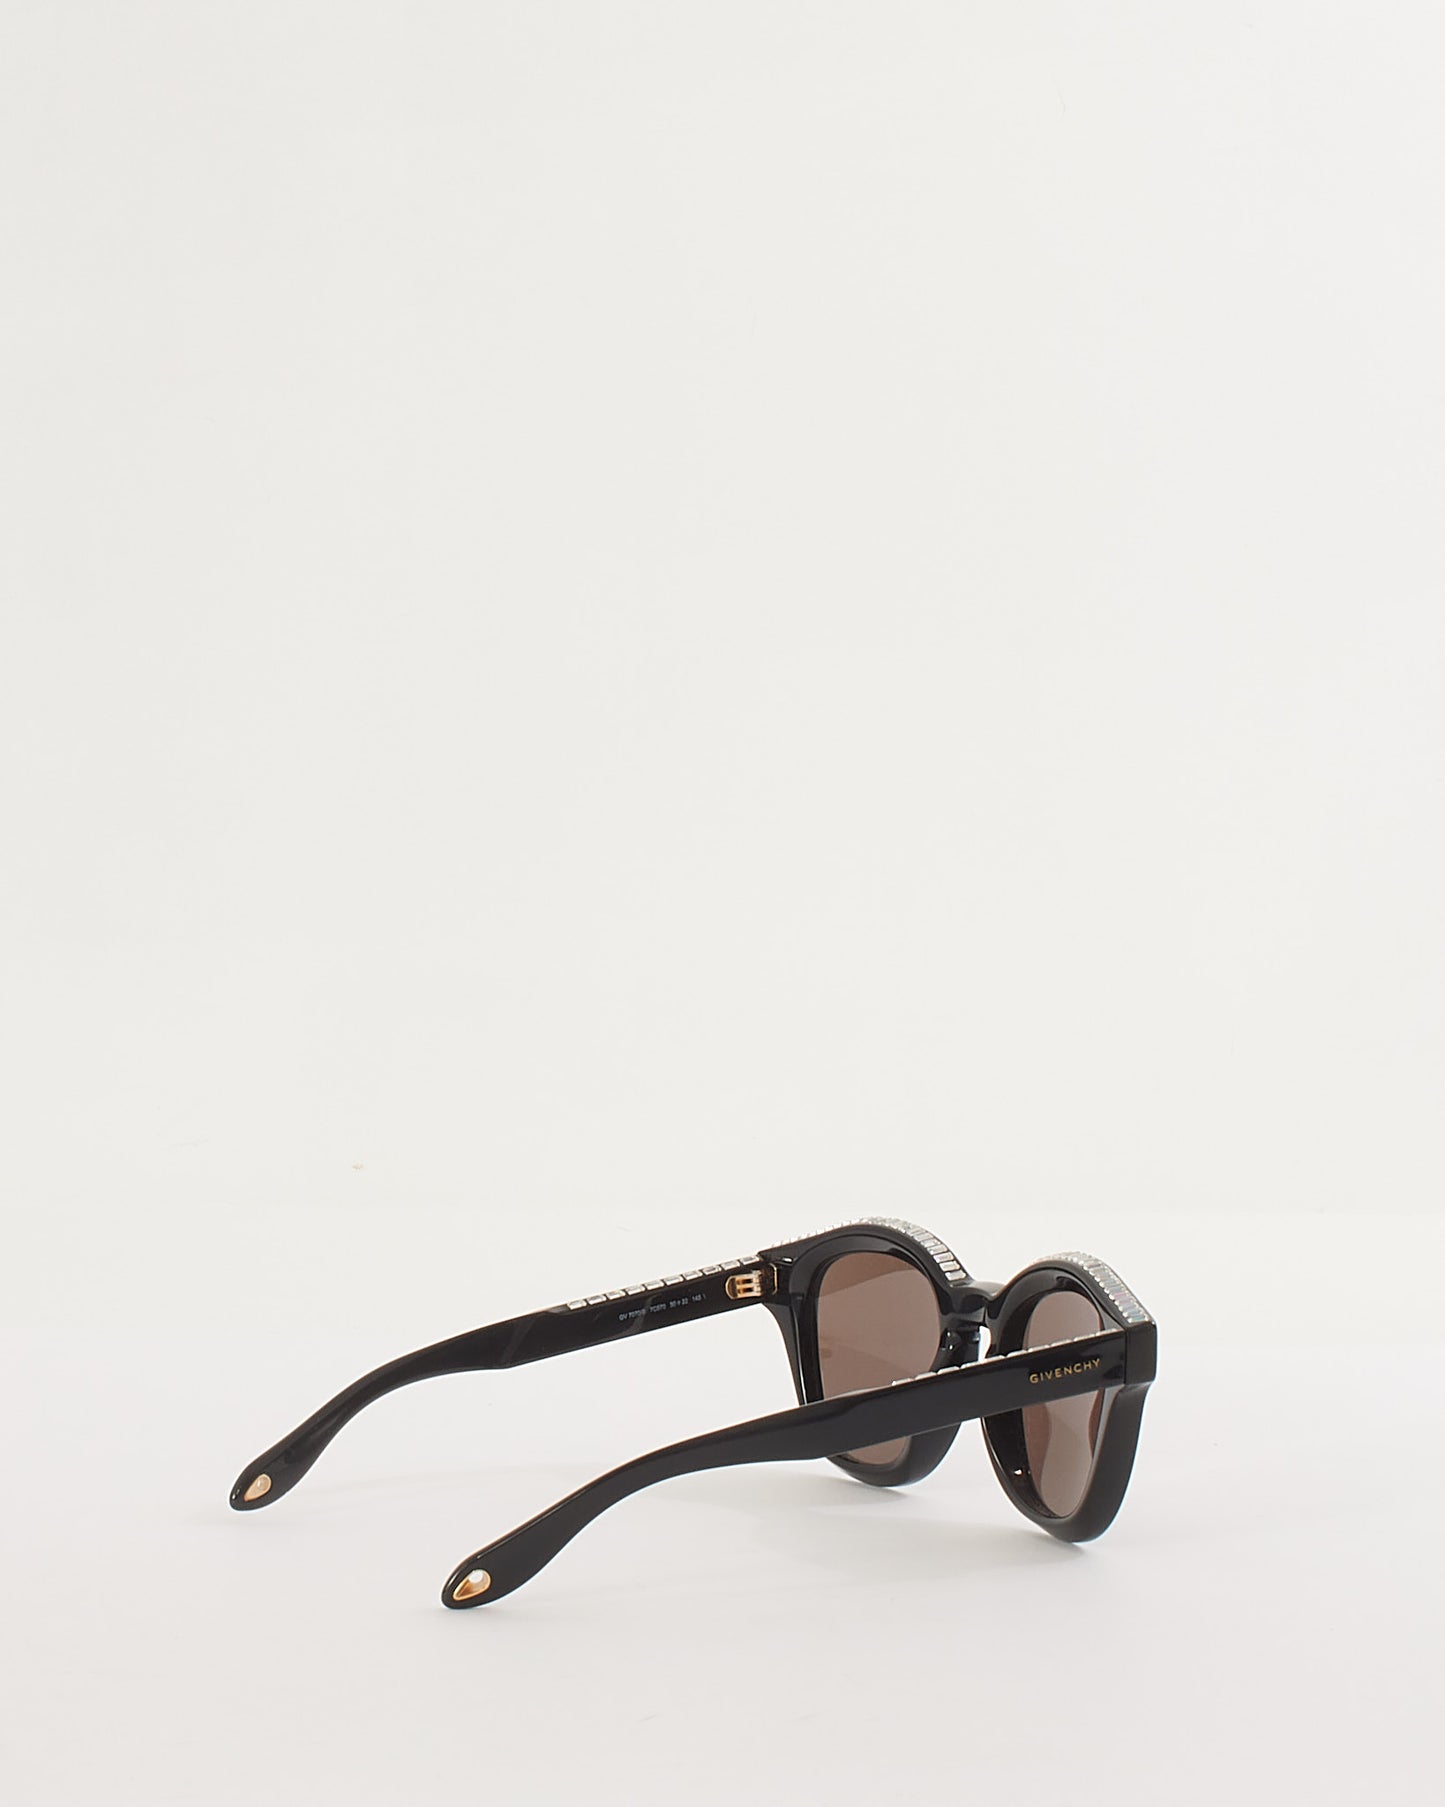 Givenchy Black Plastic Frame Round Sunglasses GV 7070/S